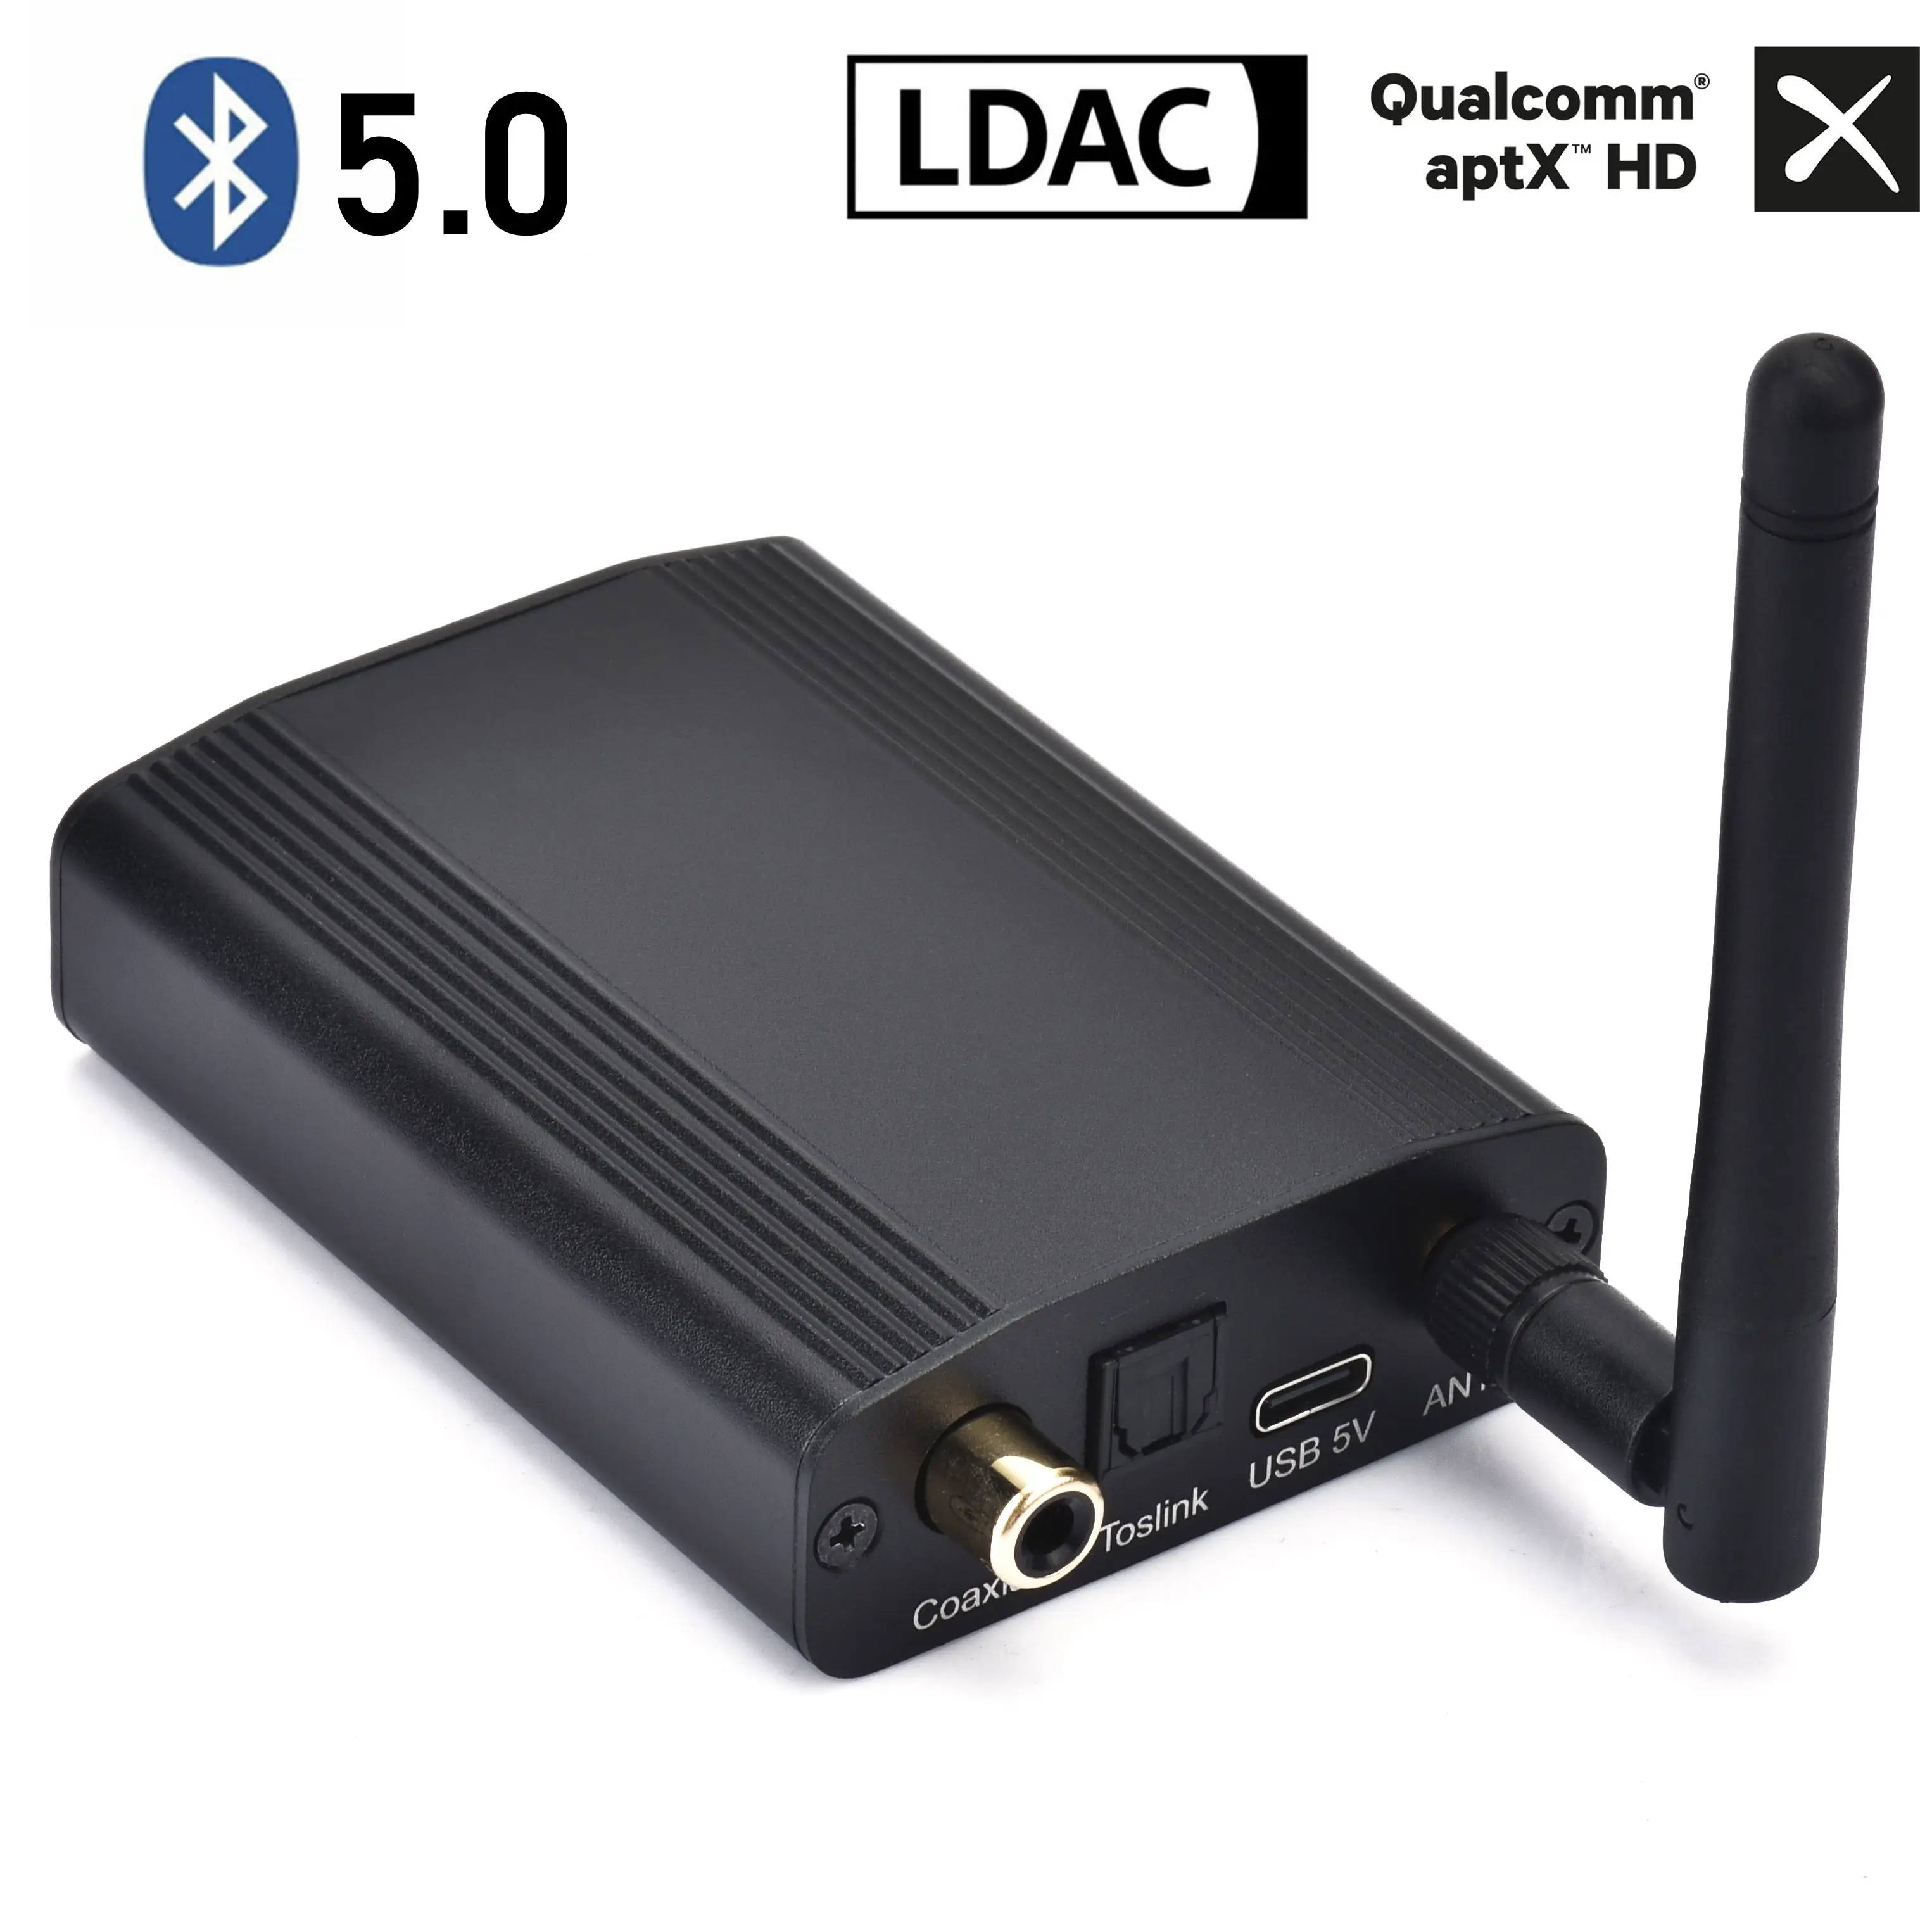 

New HiFi Bluetooth receiver Bluetooth 5.0 digital interface csr8675 optical fiber aptx HD coaxial LDAC lossless audio